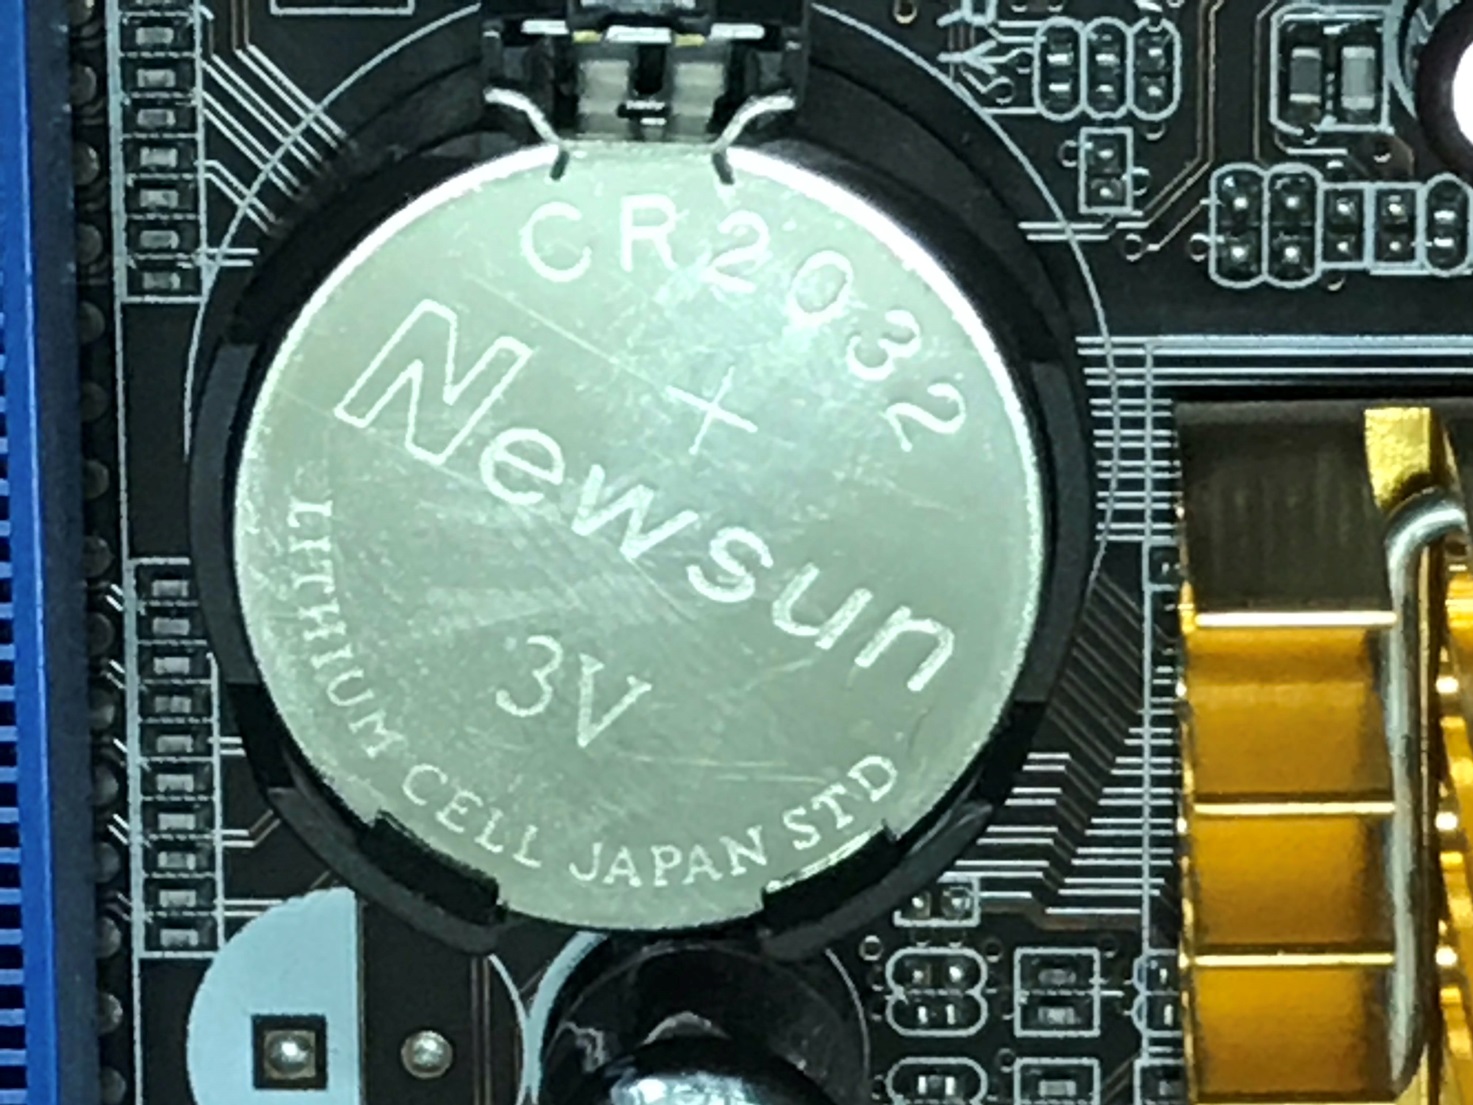 CR2032鈕扣型鋰電池是屬於一次性鋰電池，常常用來裝在電腦主機板、計算機、遙控器、科學儀器、手錶和其他小型設備中的電池。CR是指鋰電池，2032是指直徑20毫米、高度為3.2毫米。根據國際電工委員會（IEC）標準60086的定義，CR2032為直徑19.7-20毫米、CR2032規格參數表，標準電壓 3V，標準容量210mAh ，標準電流0.2mA ，最大連續電流 2.0mA ，最大脈衝電流 20mA ，最大尺寸 Φ20.0x3.2mm ，重量3.1g，高度2.9-3.2毫米的圓柱體。一次性鋰電池以金屬鋰(Li)為陽極，碘(I2)為陰極，電解質常使用碘化鋰溶液。(李柏翰拍攝)